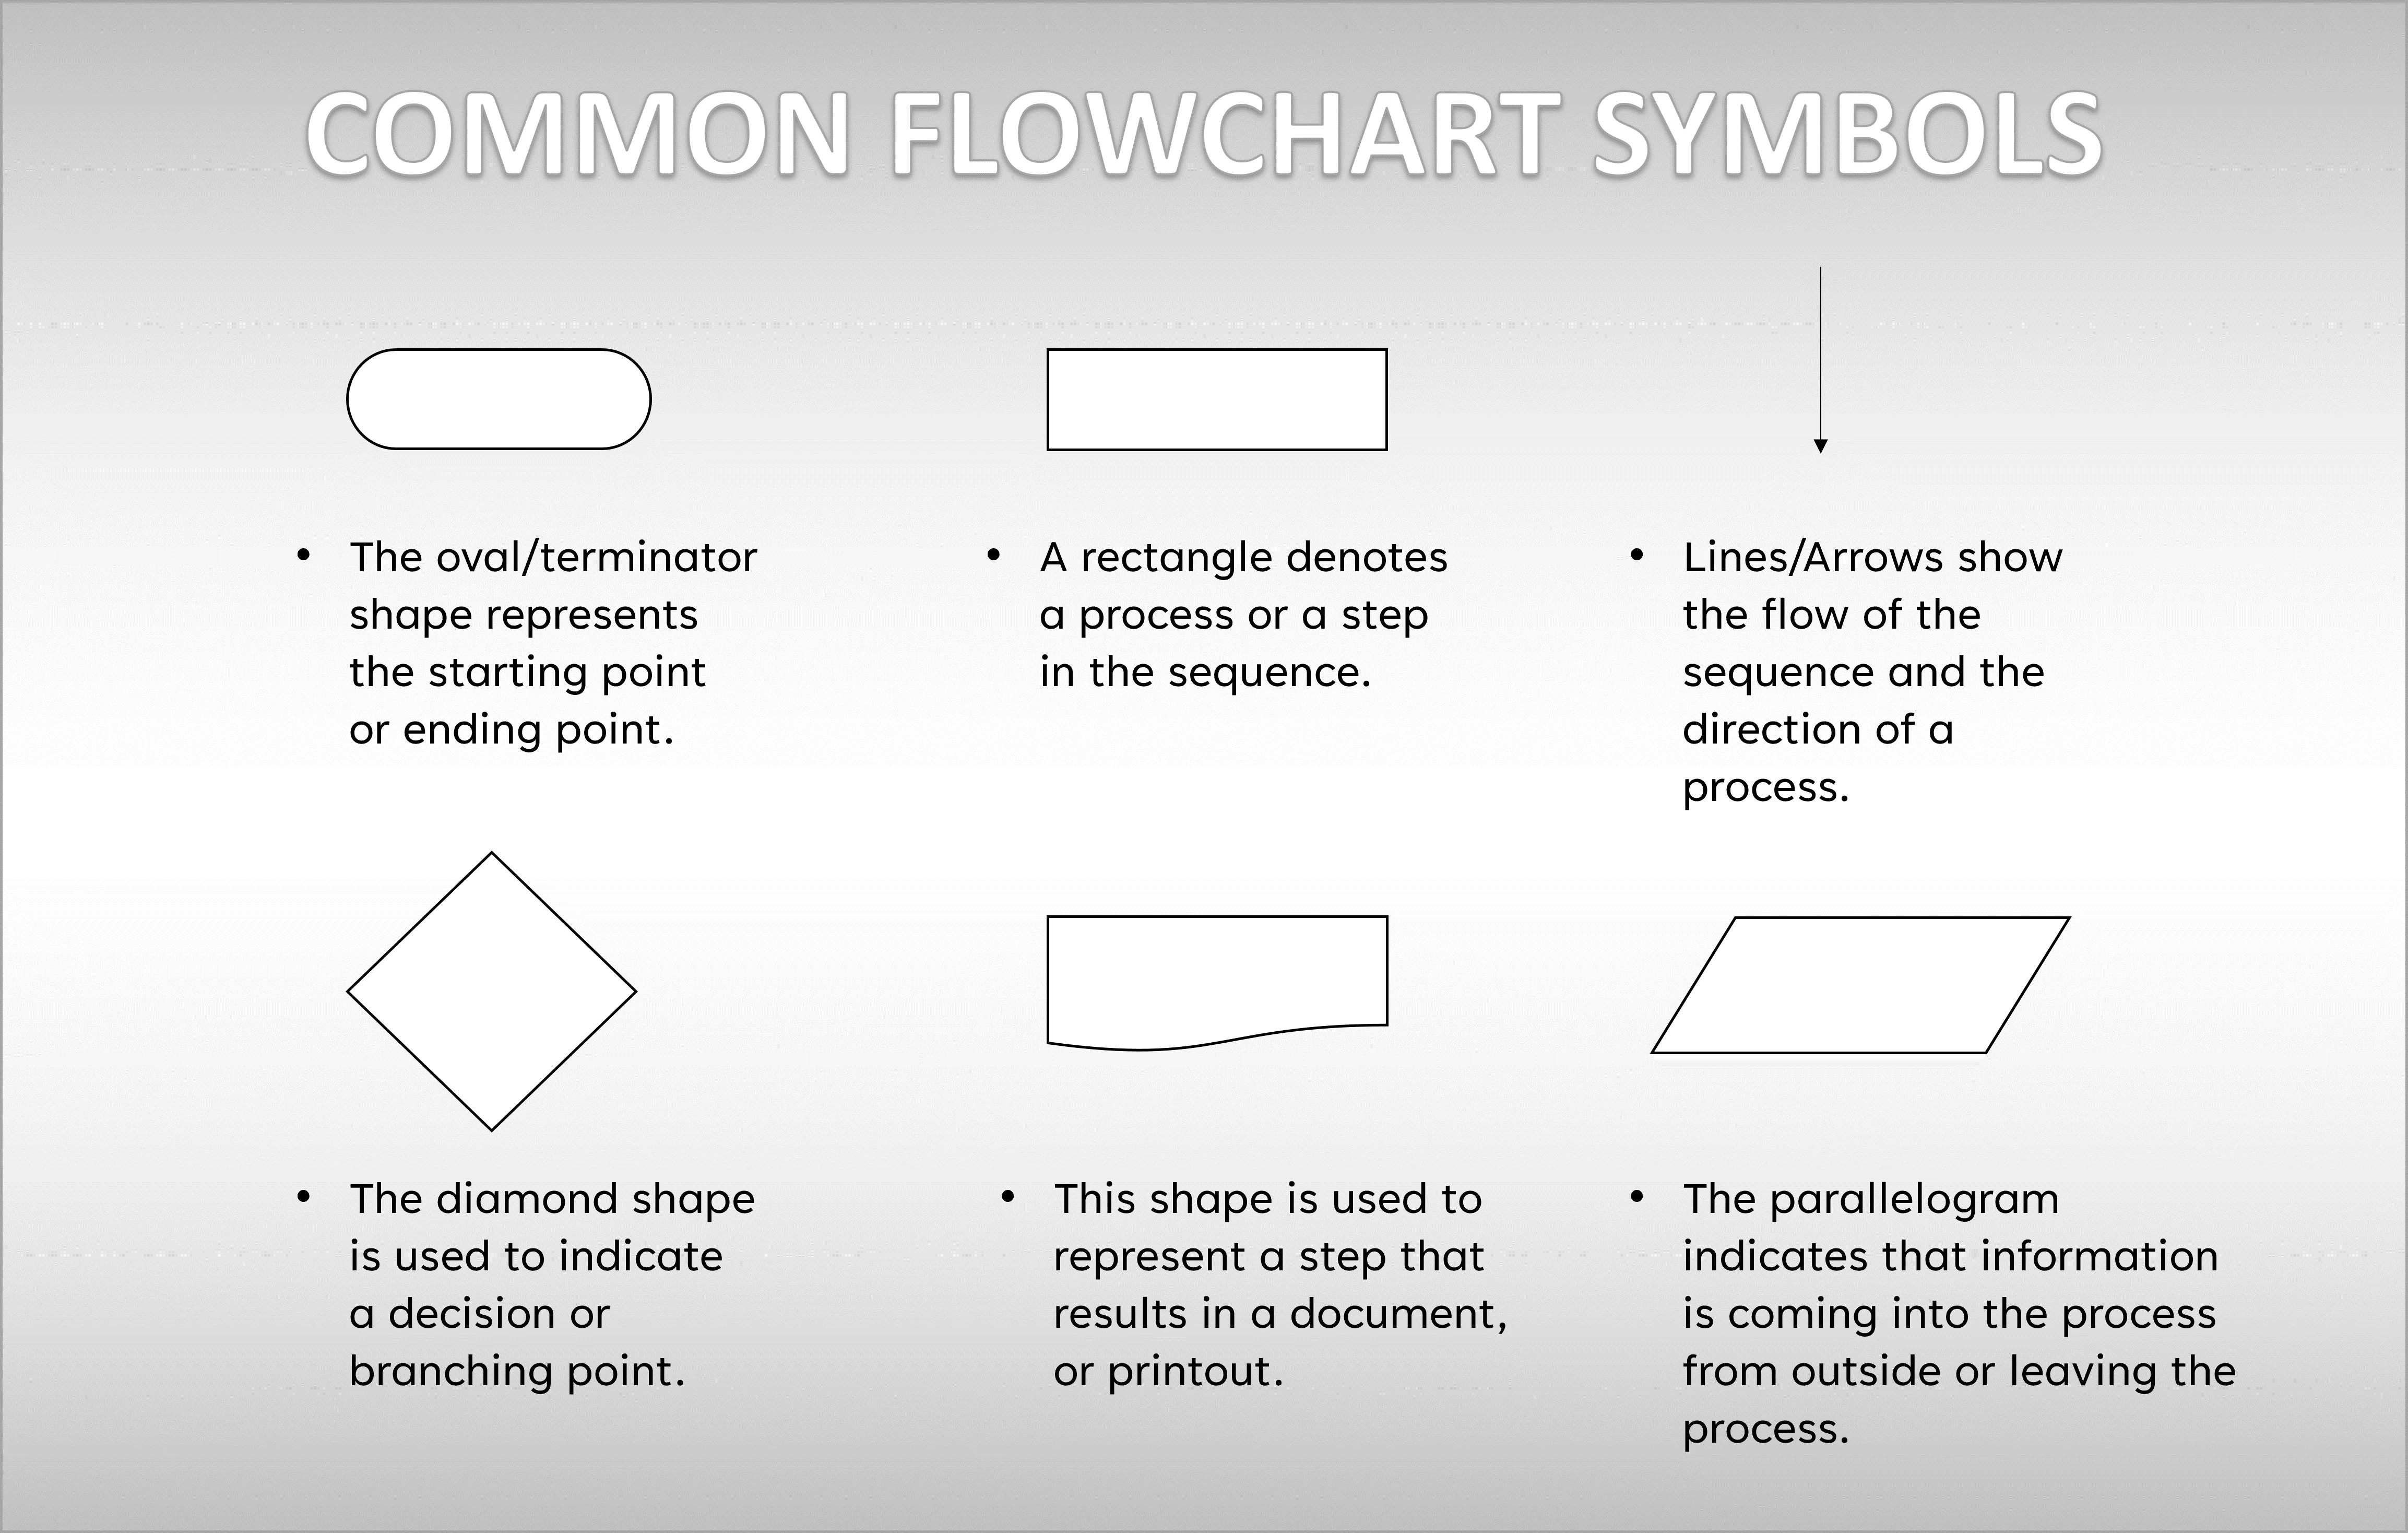 Image showing the common flowchart symbols